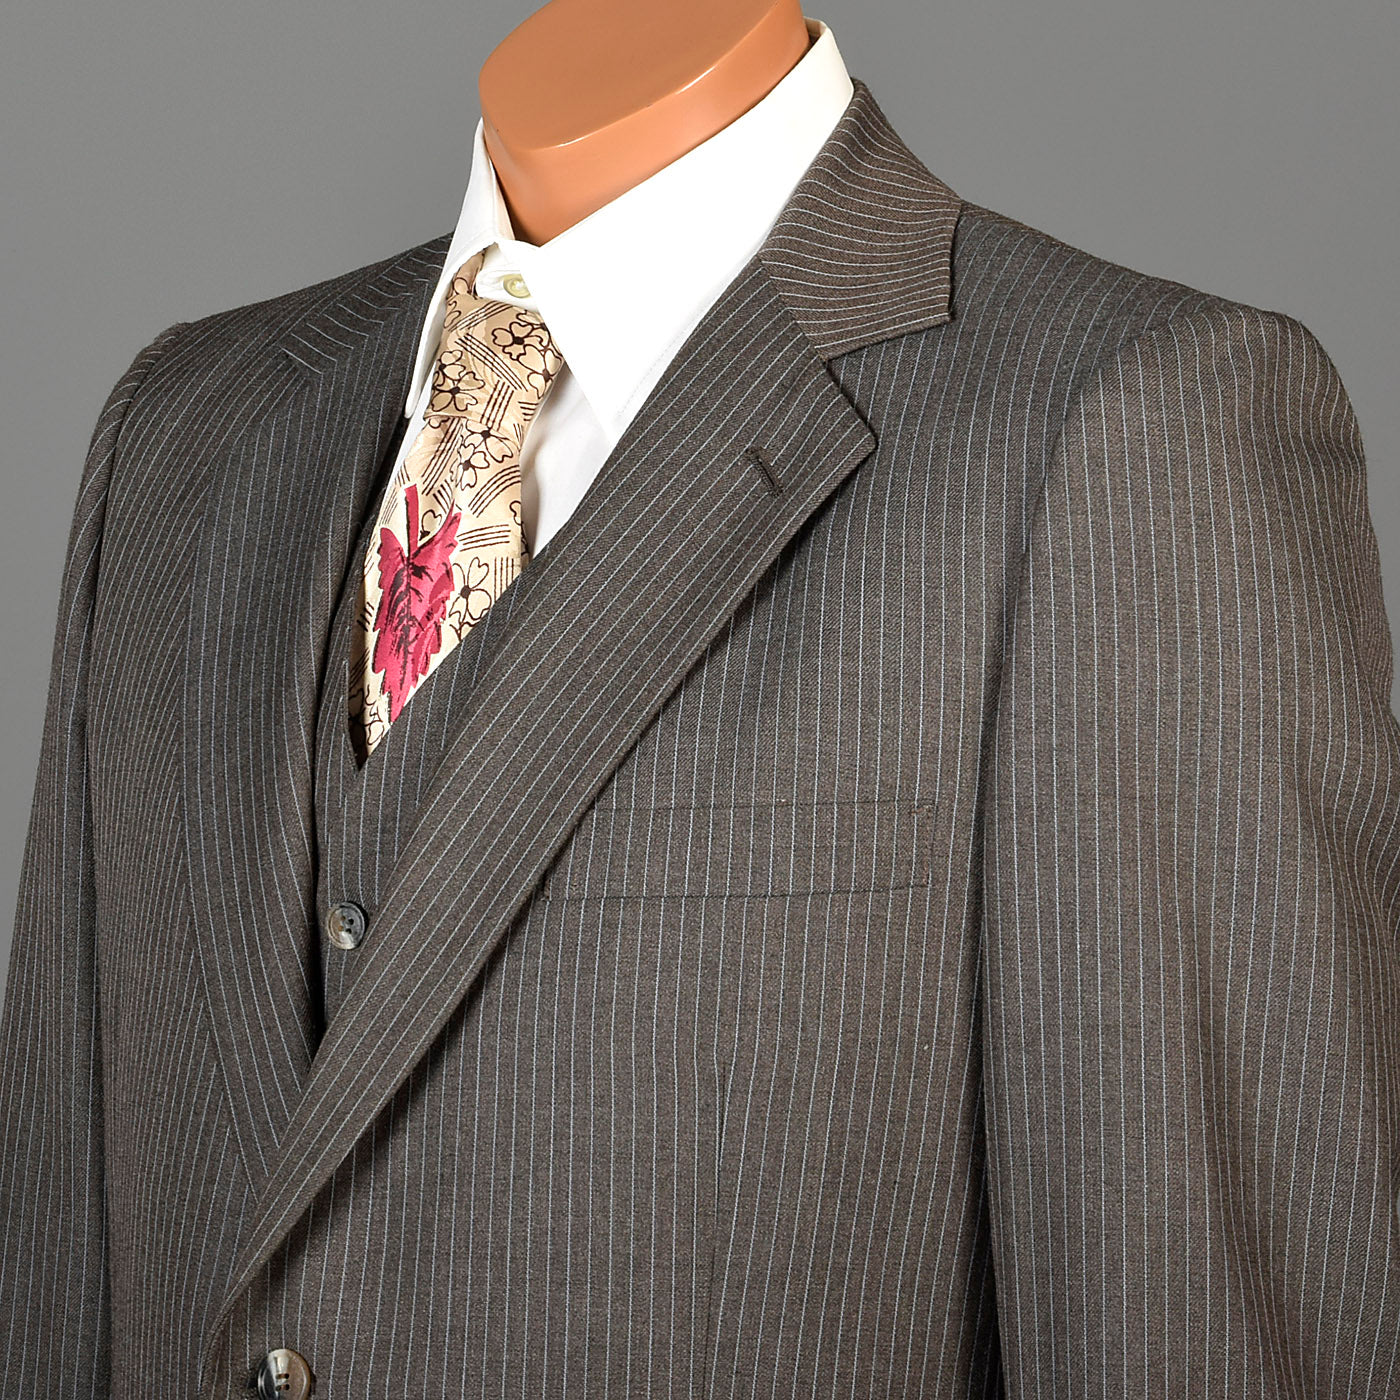 1970s Mens Three Piece Suit in Brown Pinstripe